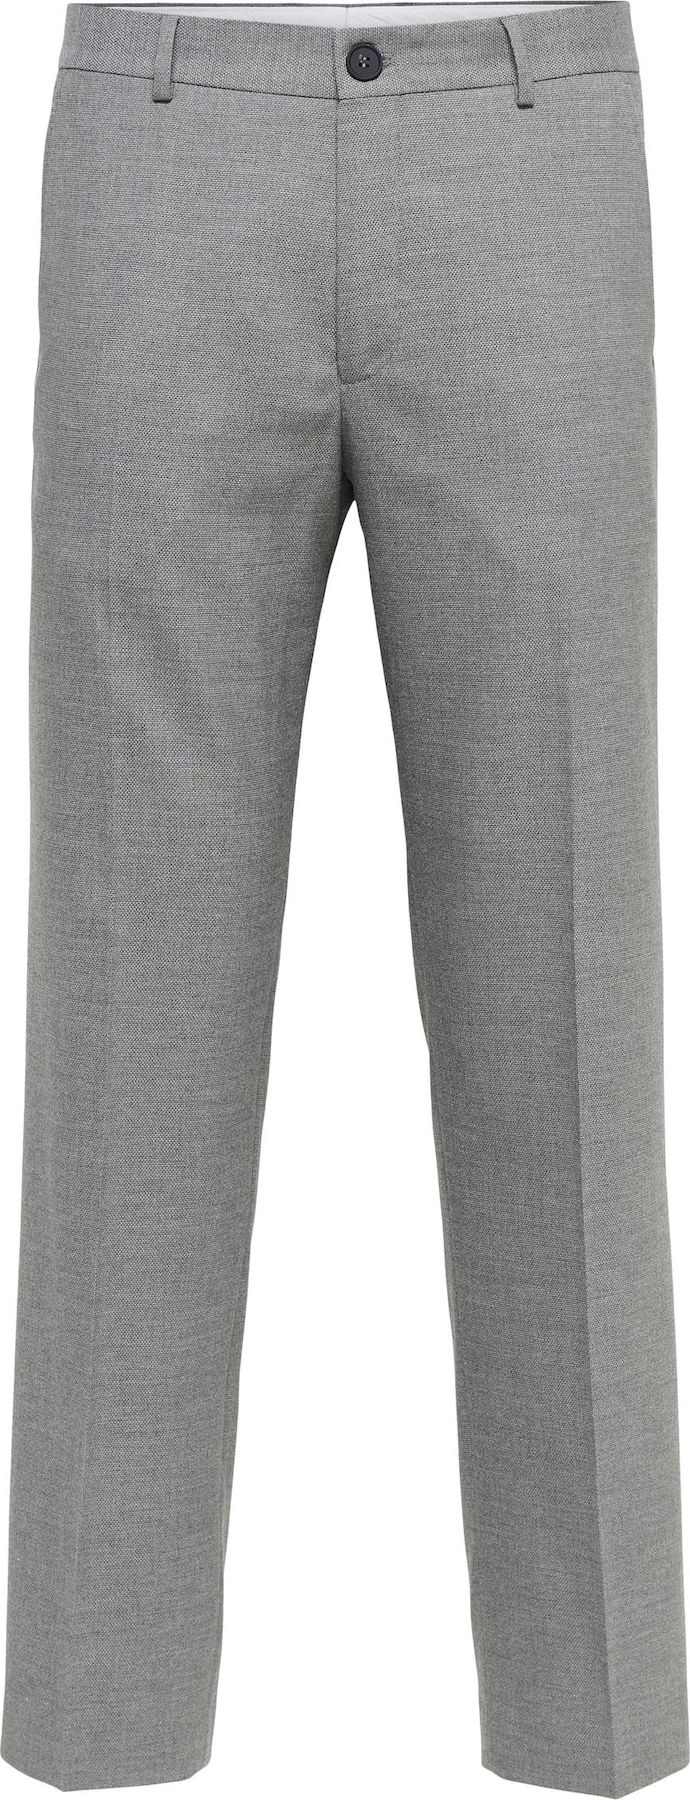 SELECTED HOMME Kalhoty s puky 'Logan' šedý melír